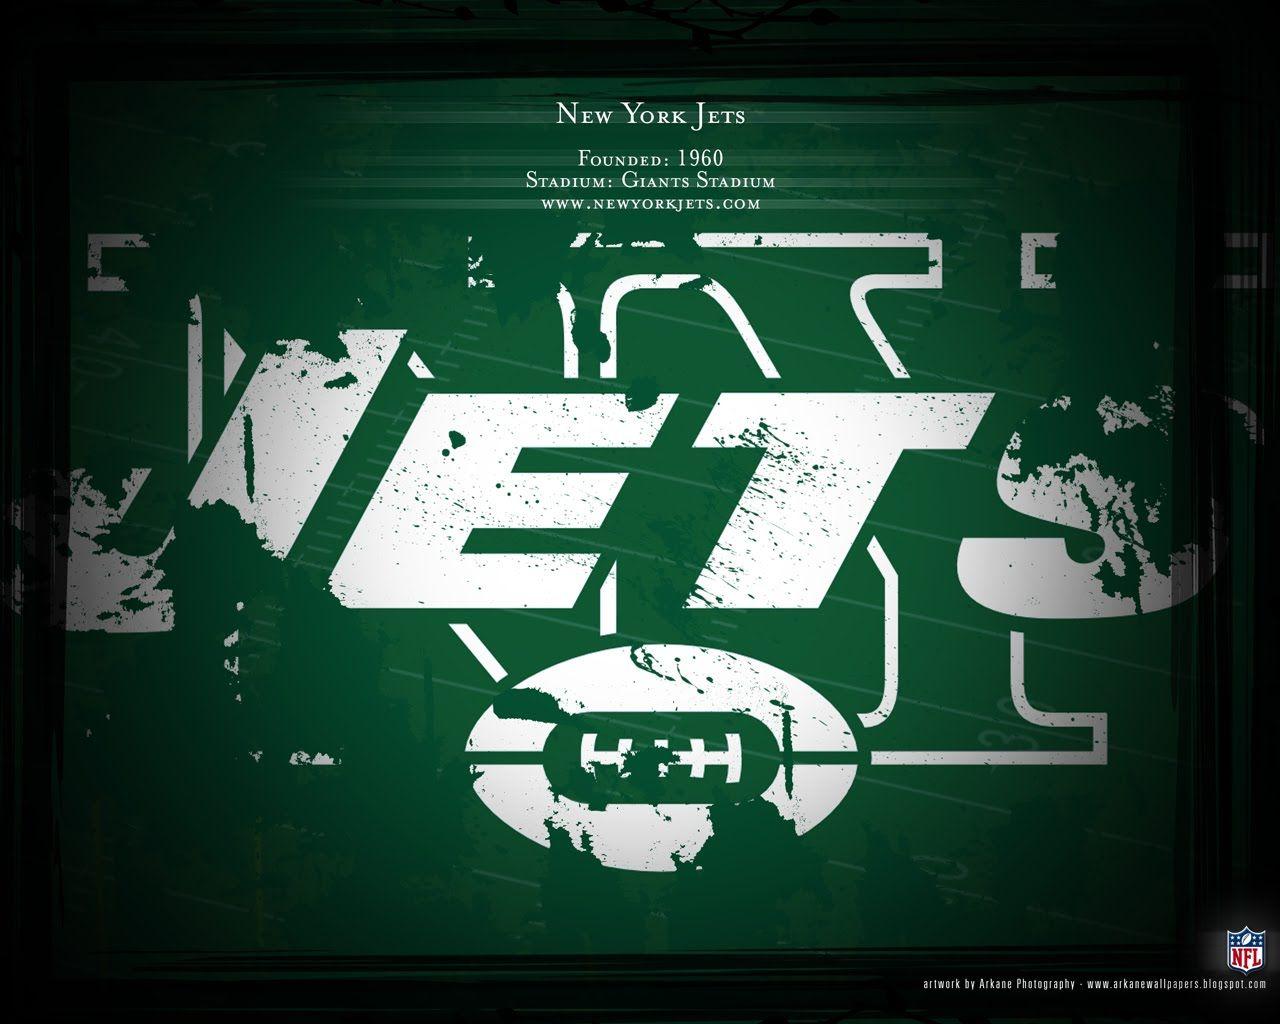 Free New York Jets Wallpaper. New York Jets Wallpaper